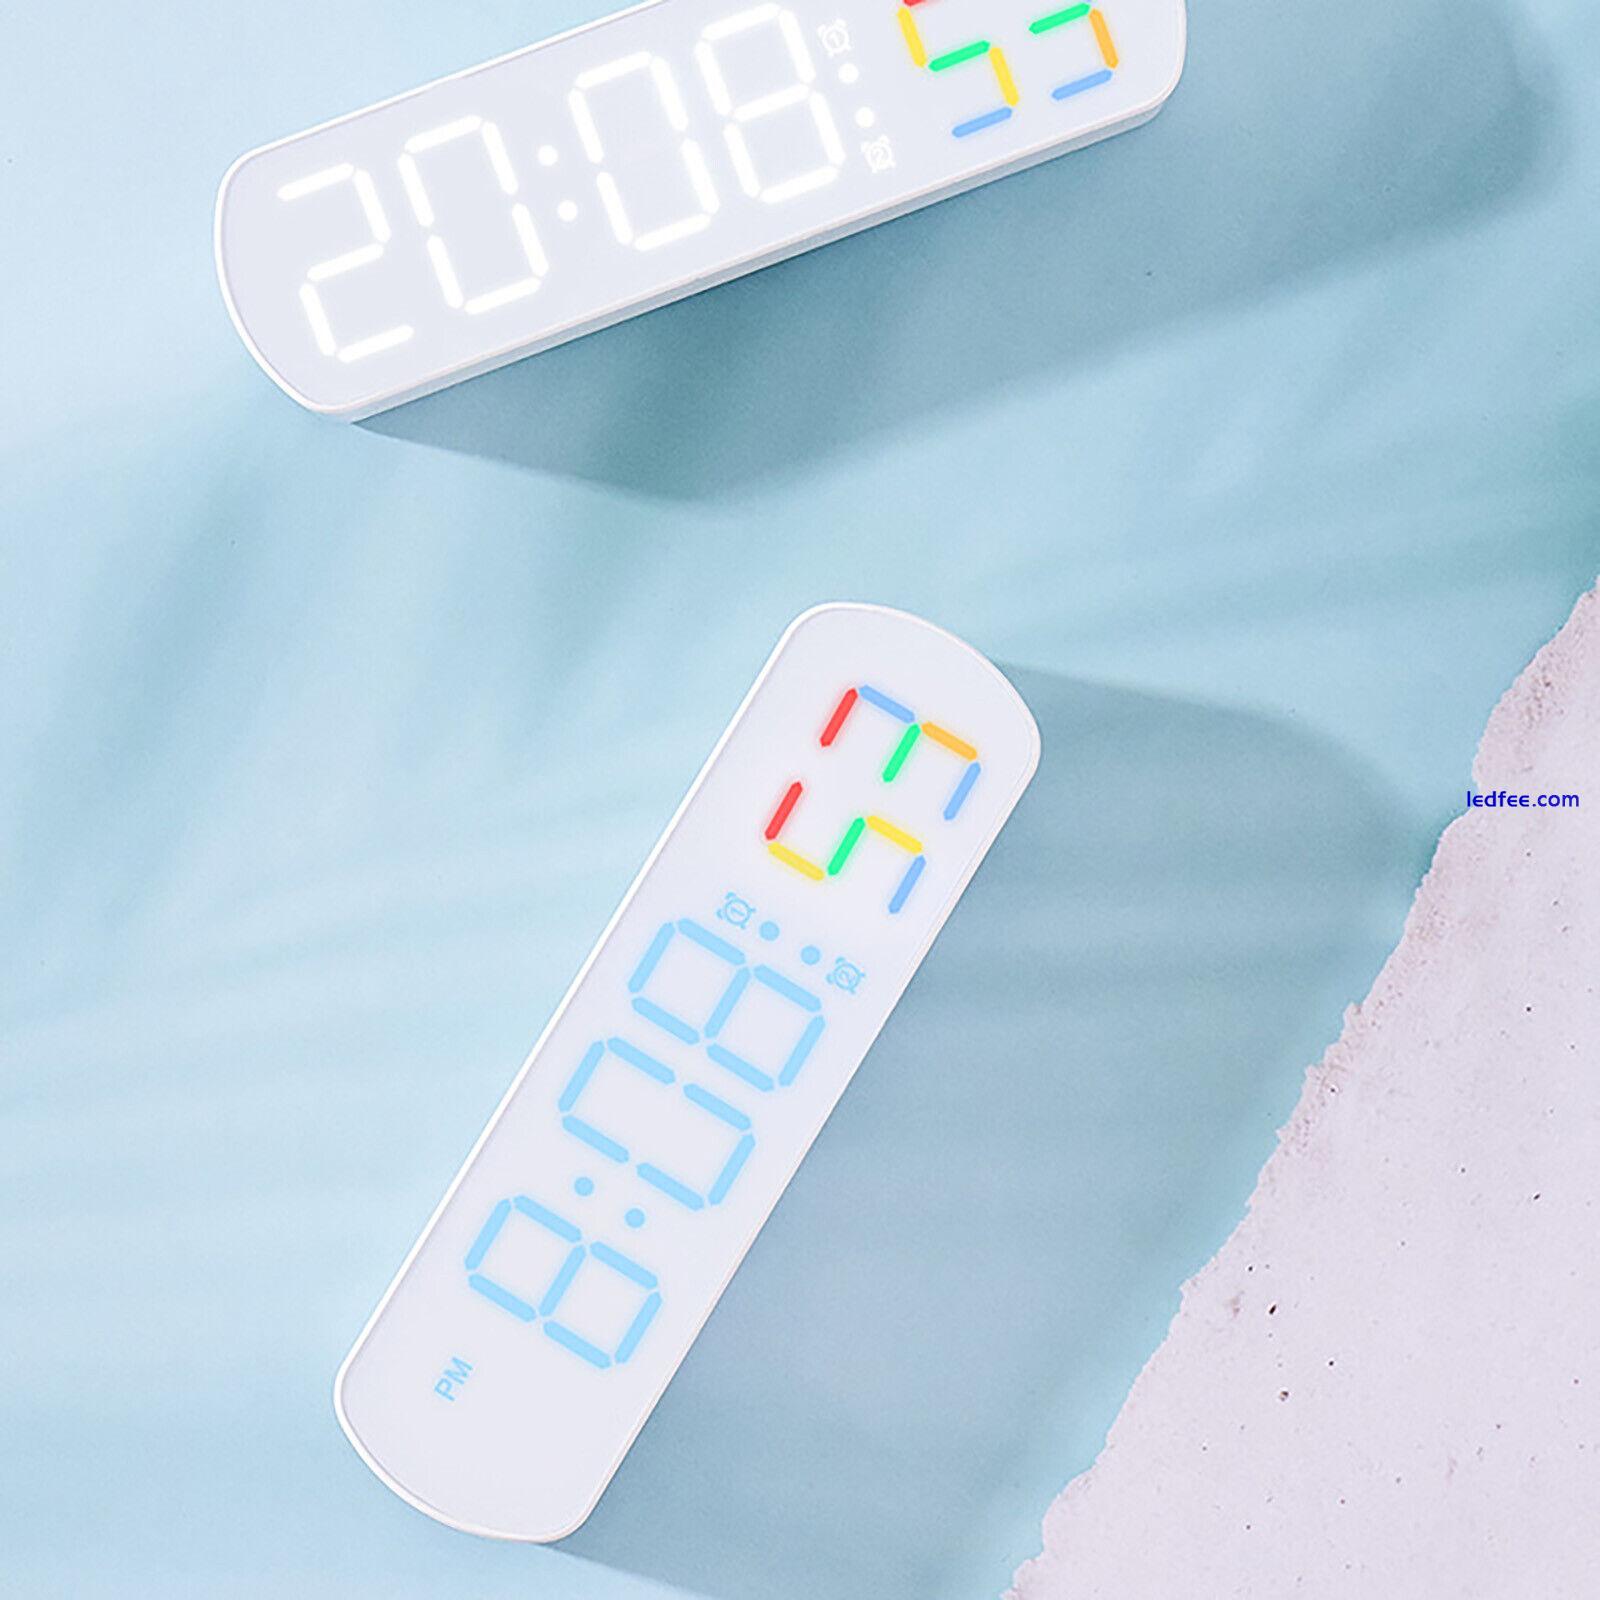 LED Electric Digital Alarm Clock with Temperature Date Display Bedside Clocks 1 